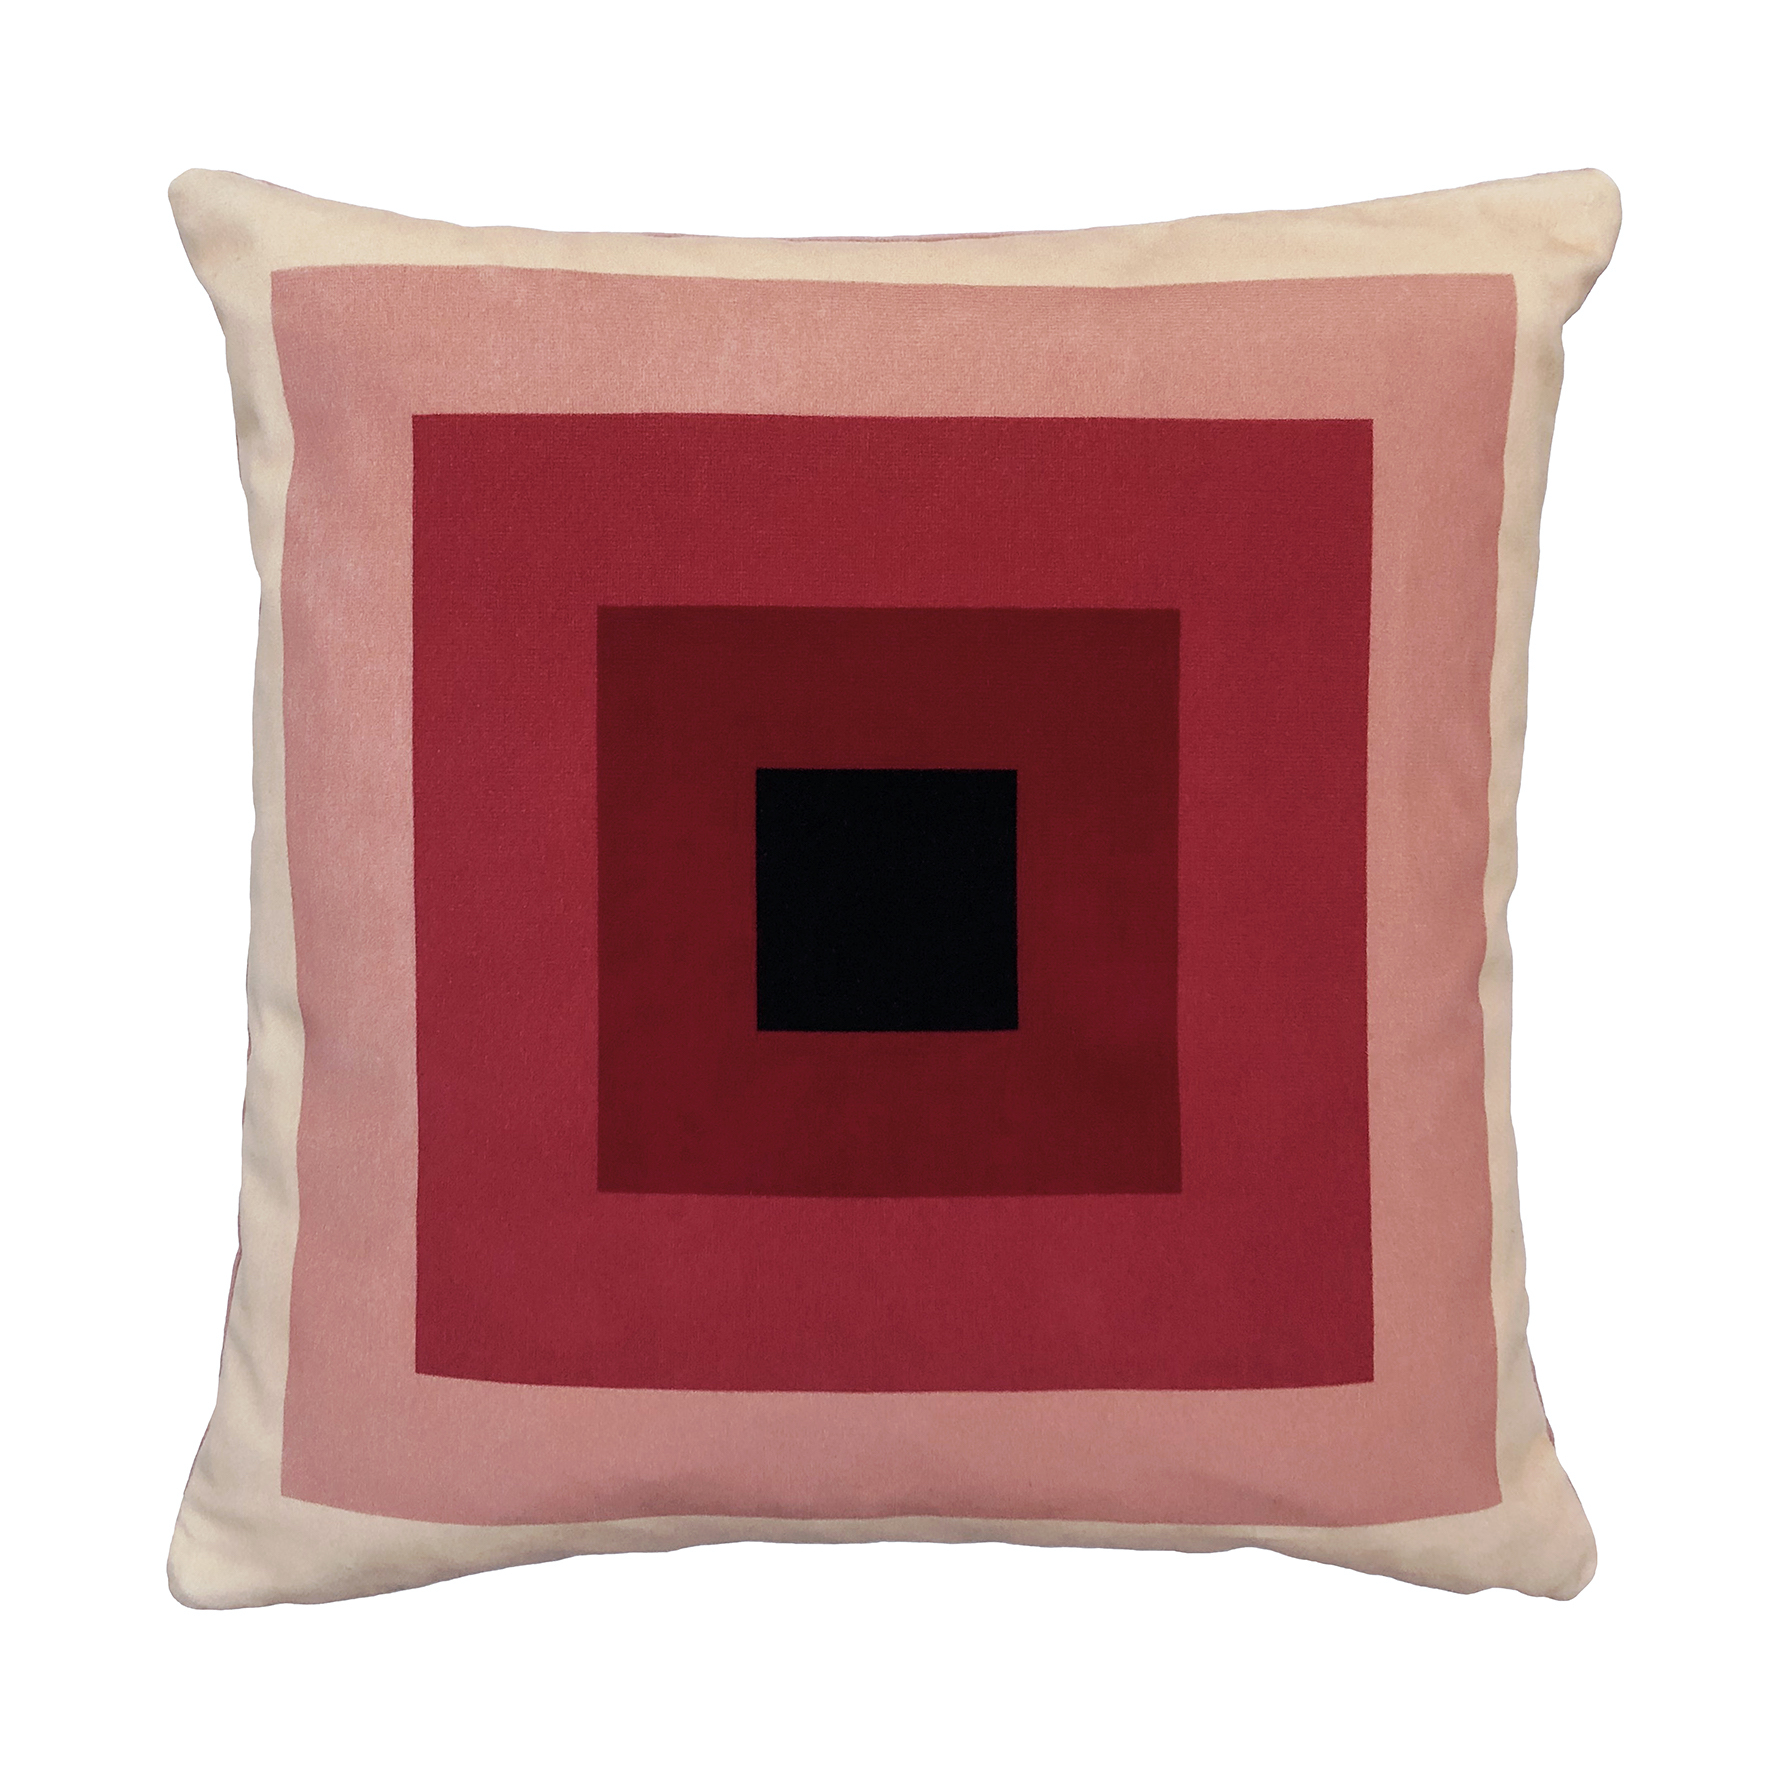 Nell cushion by Eleanor Nadimi in Winter Interior Design Trends in Effect Magazine